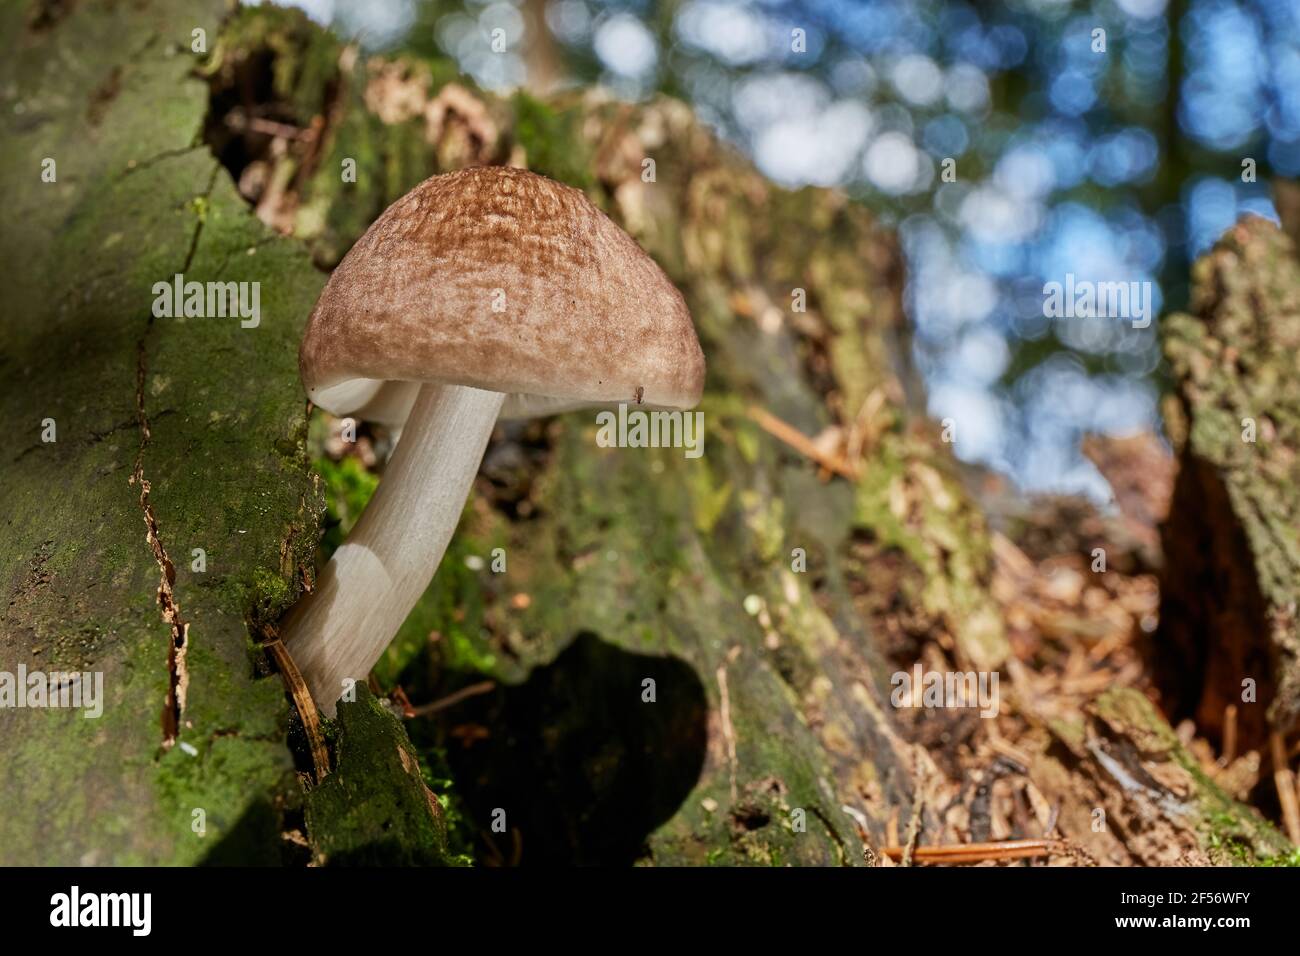 Pluteus depauperatu - inedible mushrooms. Fungus in the natural environment. Stock Photo